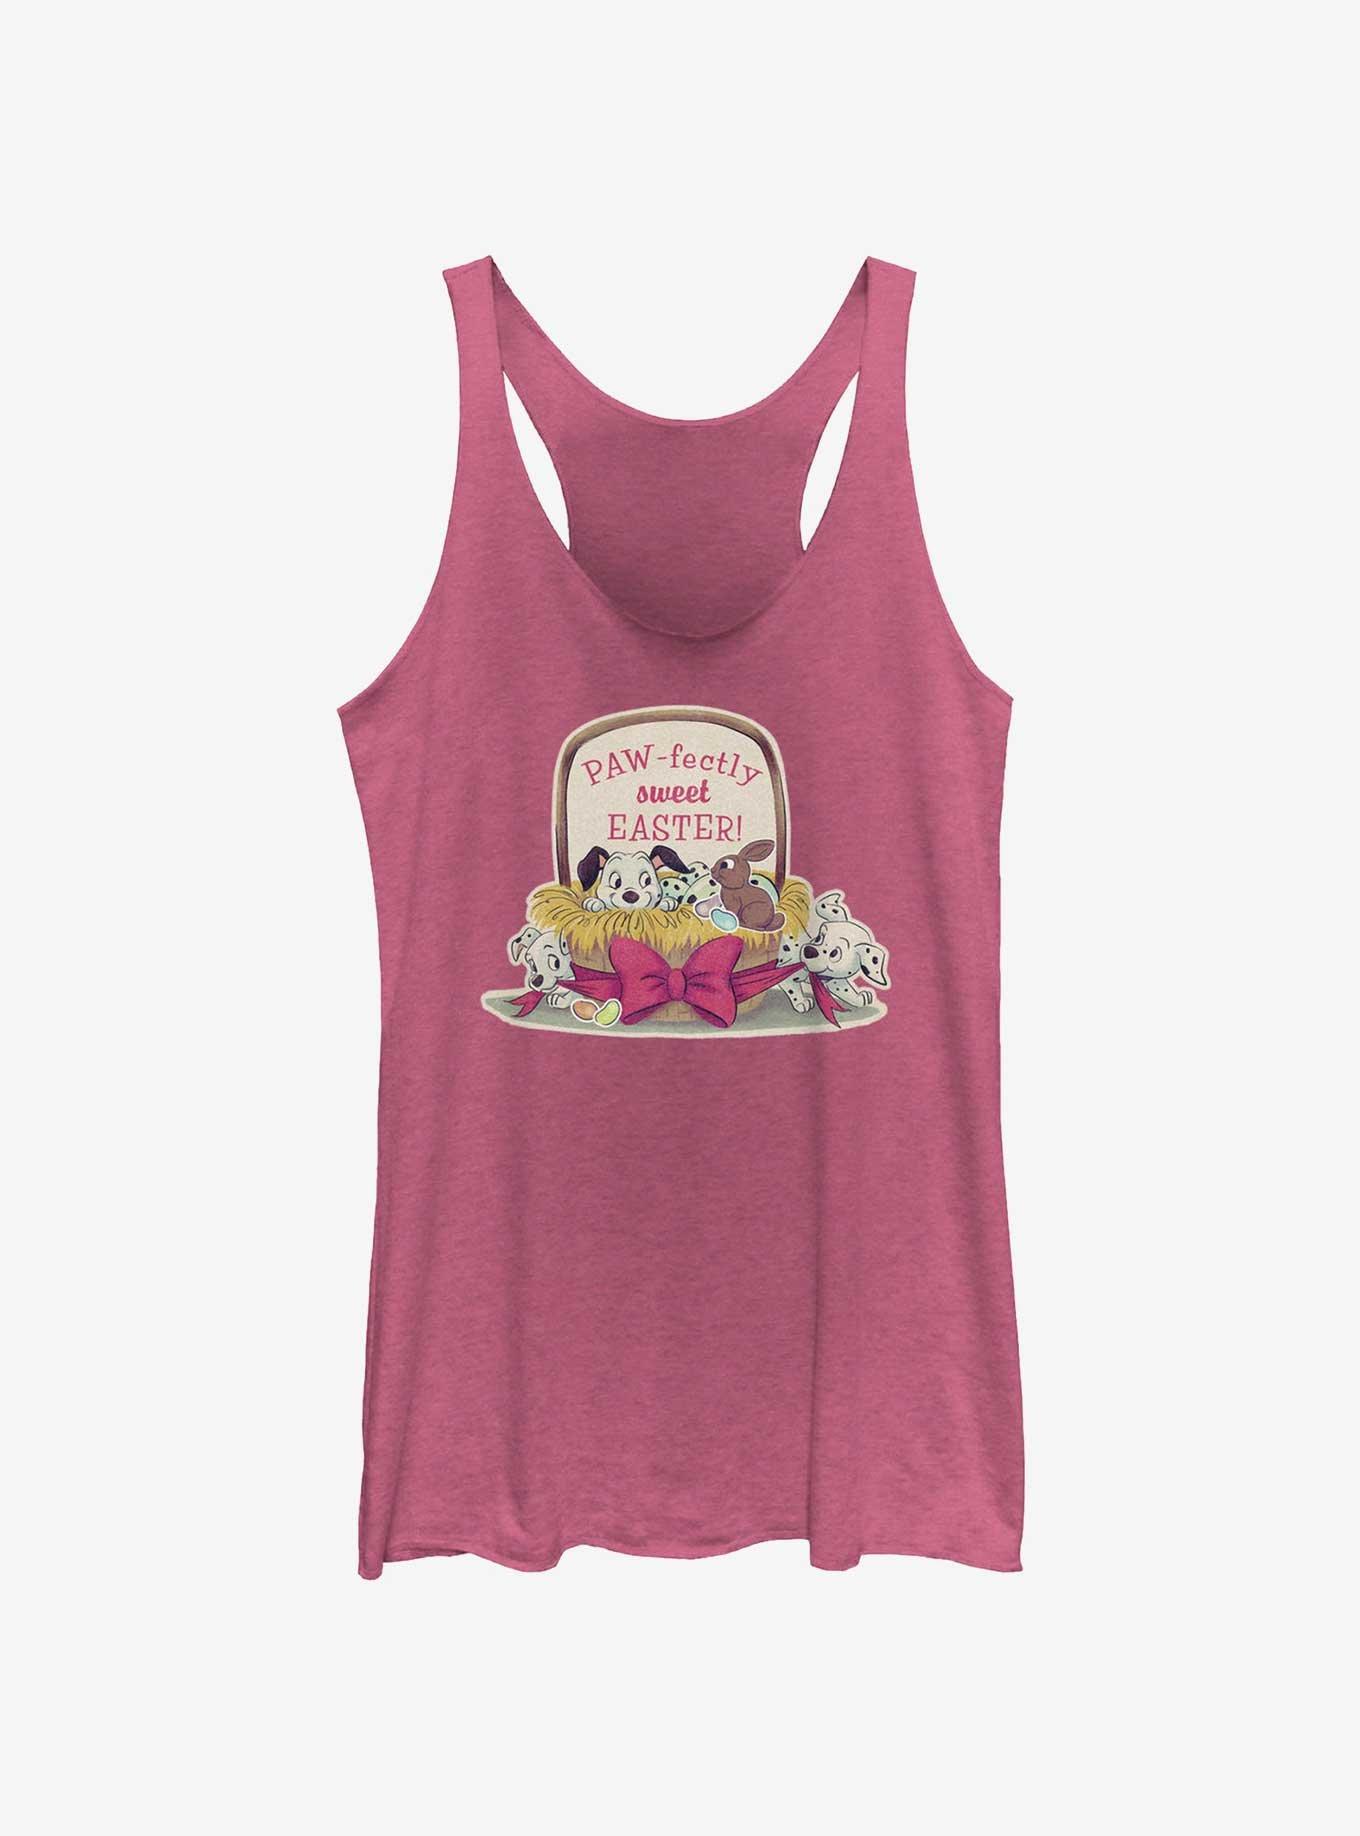 Disney 101 Dalmatians Paw-Fectly Sweet Easter Girls Tank, PINK HTR, hi-res